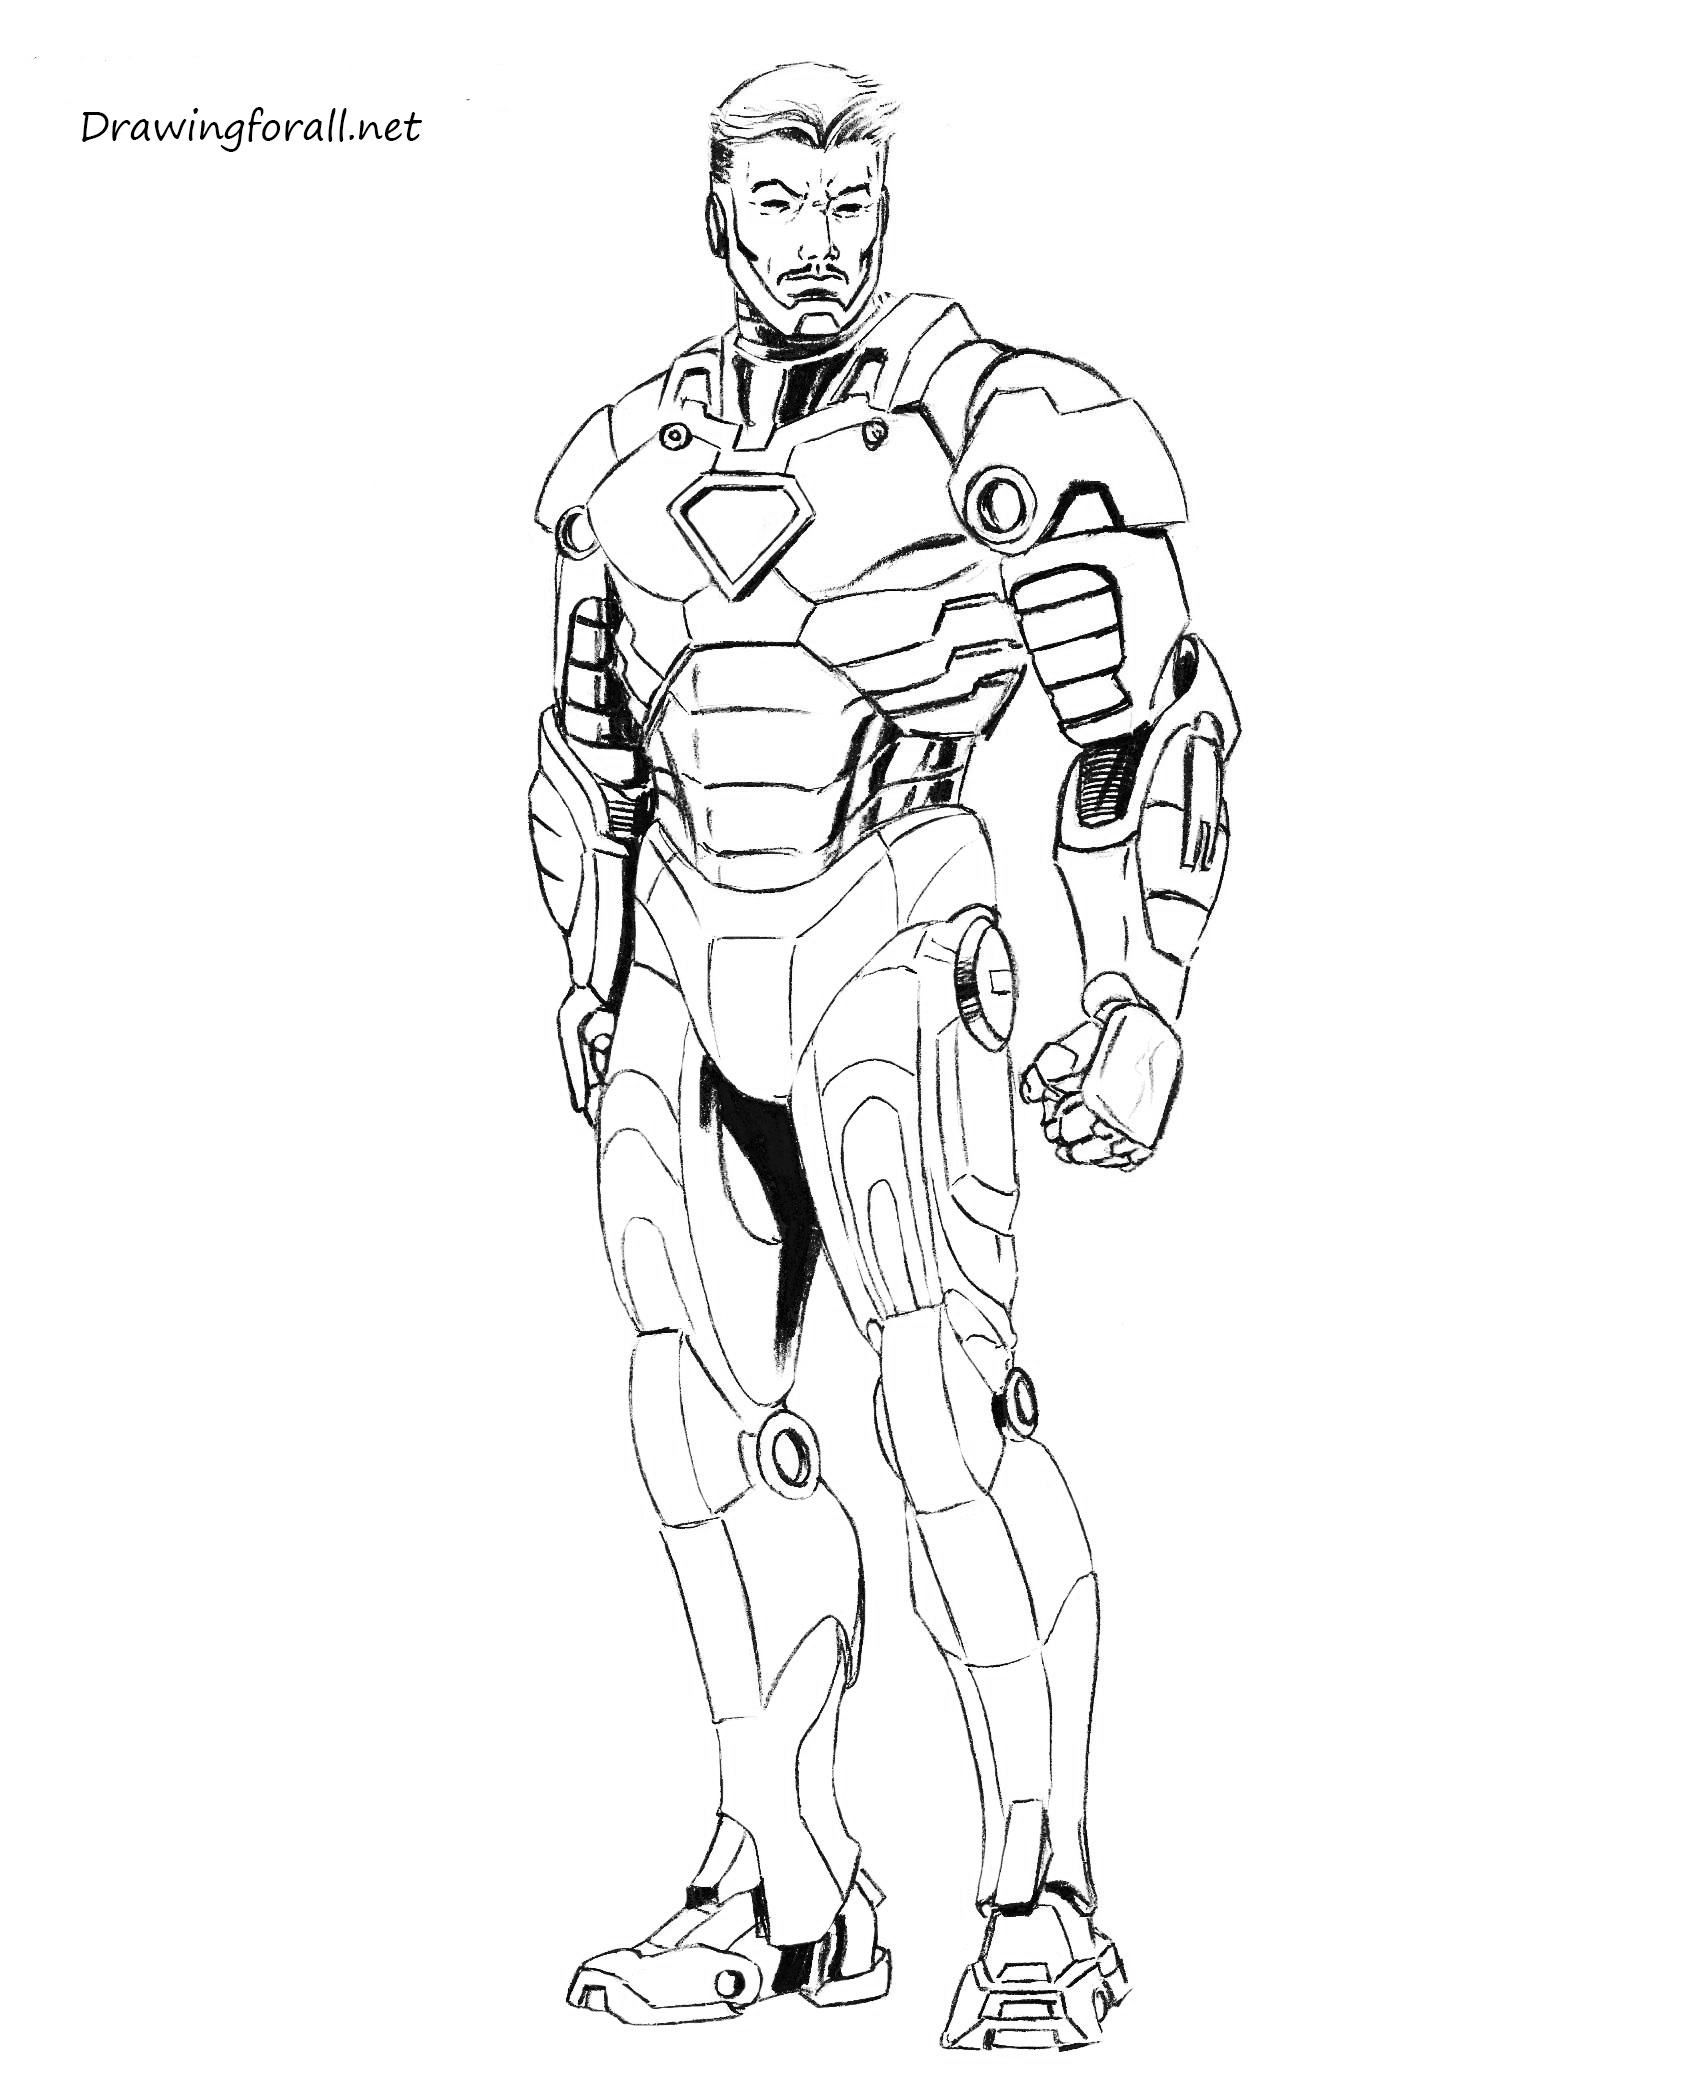 Realistic Tony Stark Sketch  emjmarketingcom